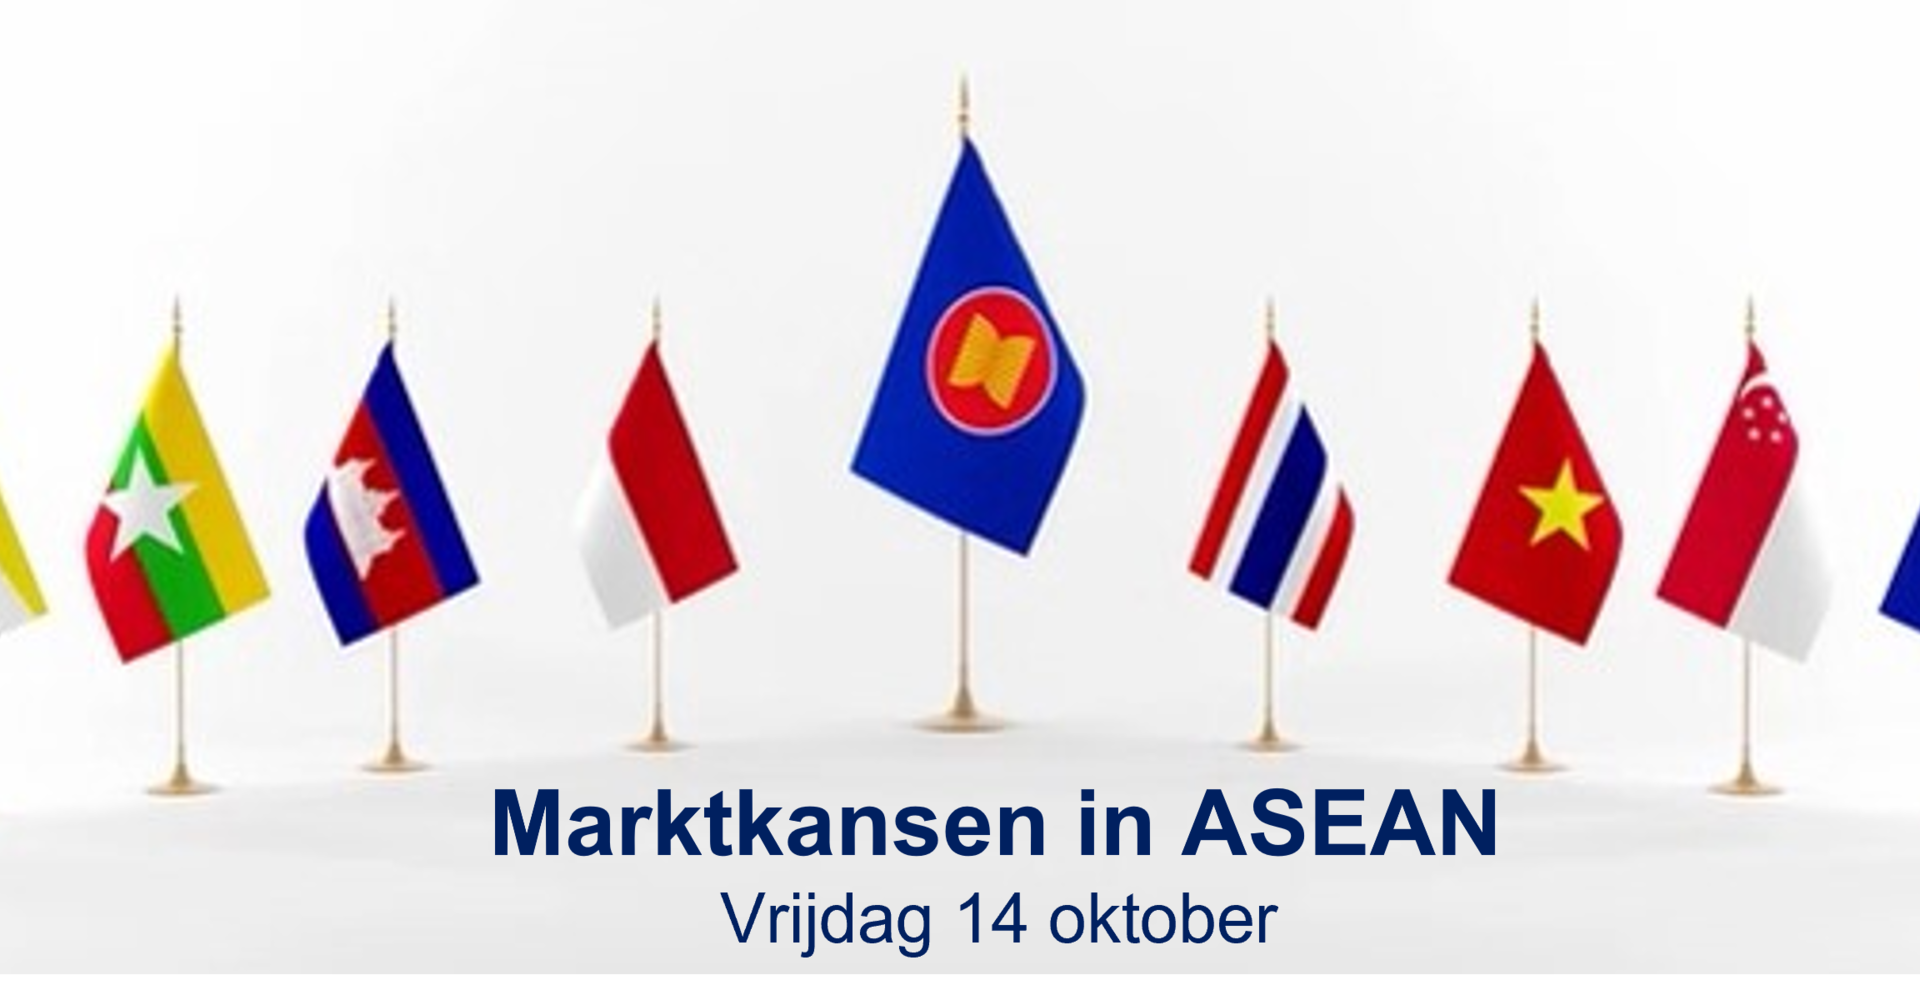 Marktkansen in ASEAN